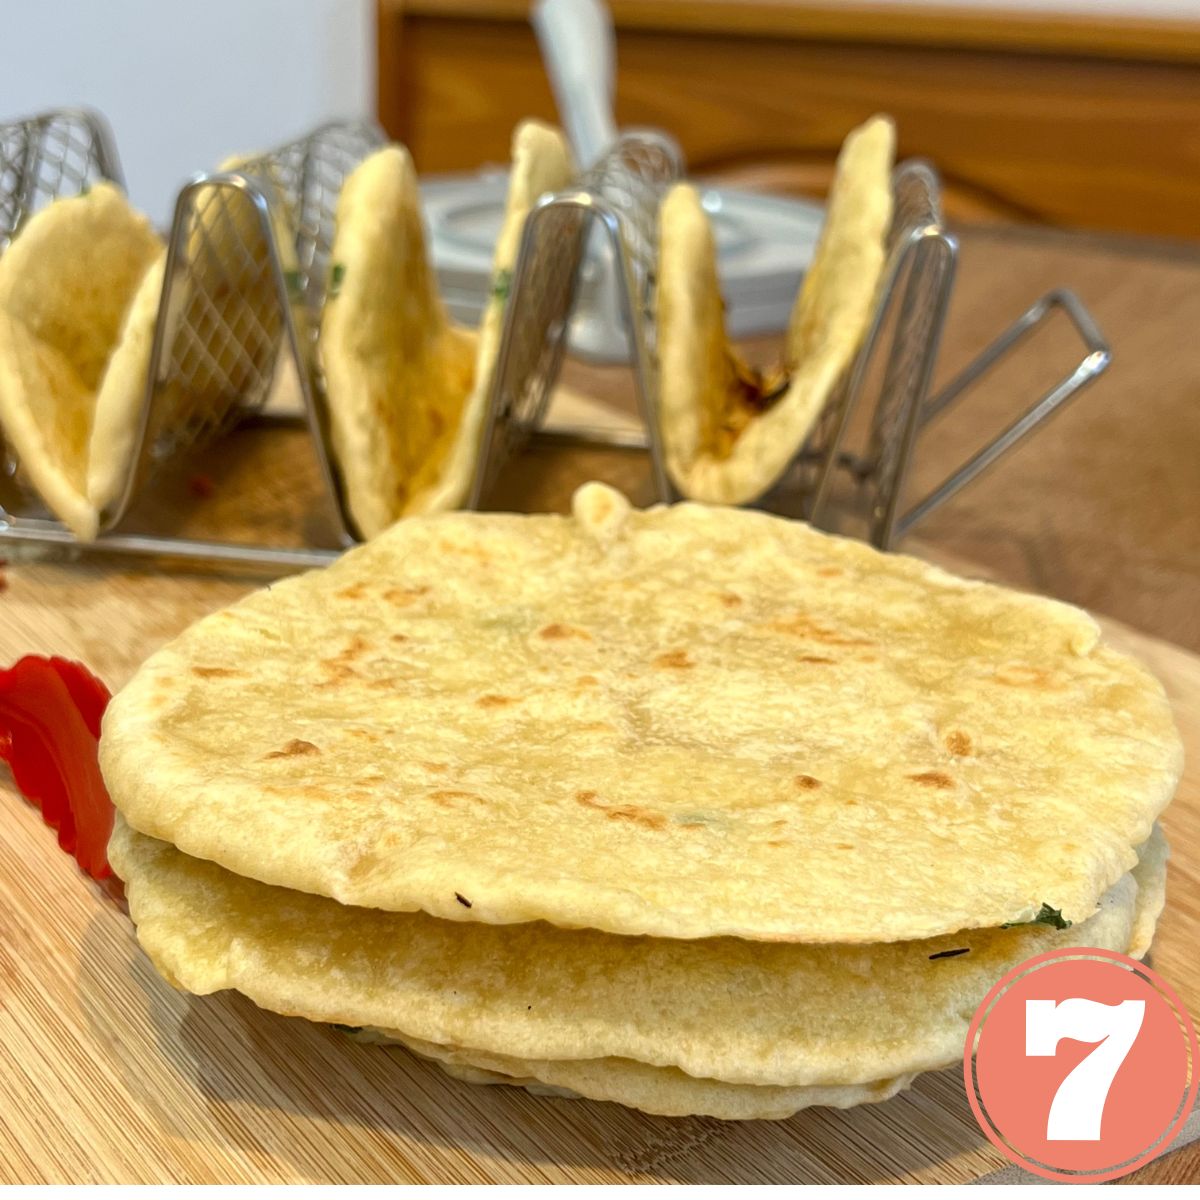 A stack of homemade flour tortillas and homemade taco shells